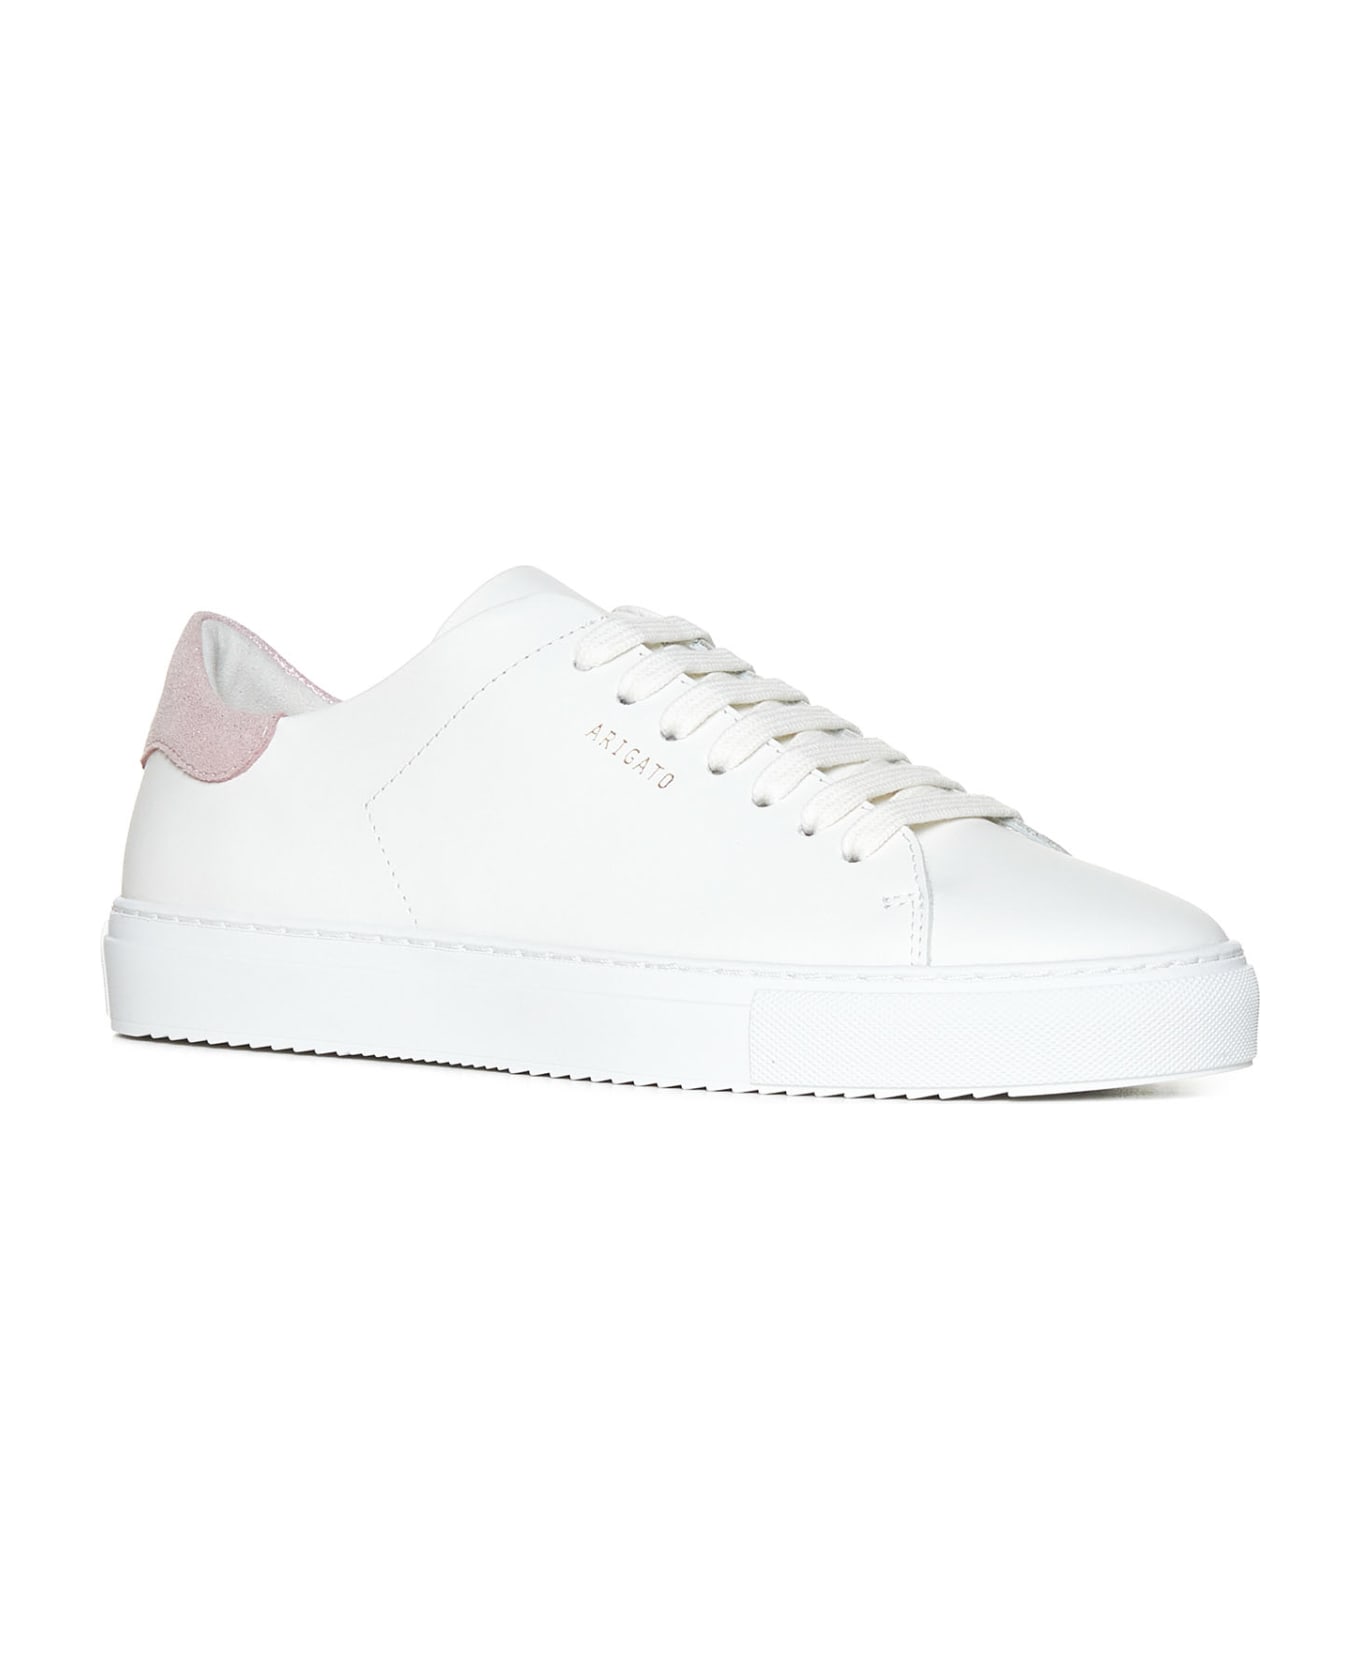 Axel Arigato Sneakers - White/pink